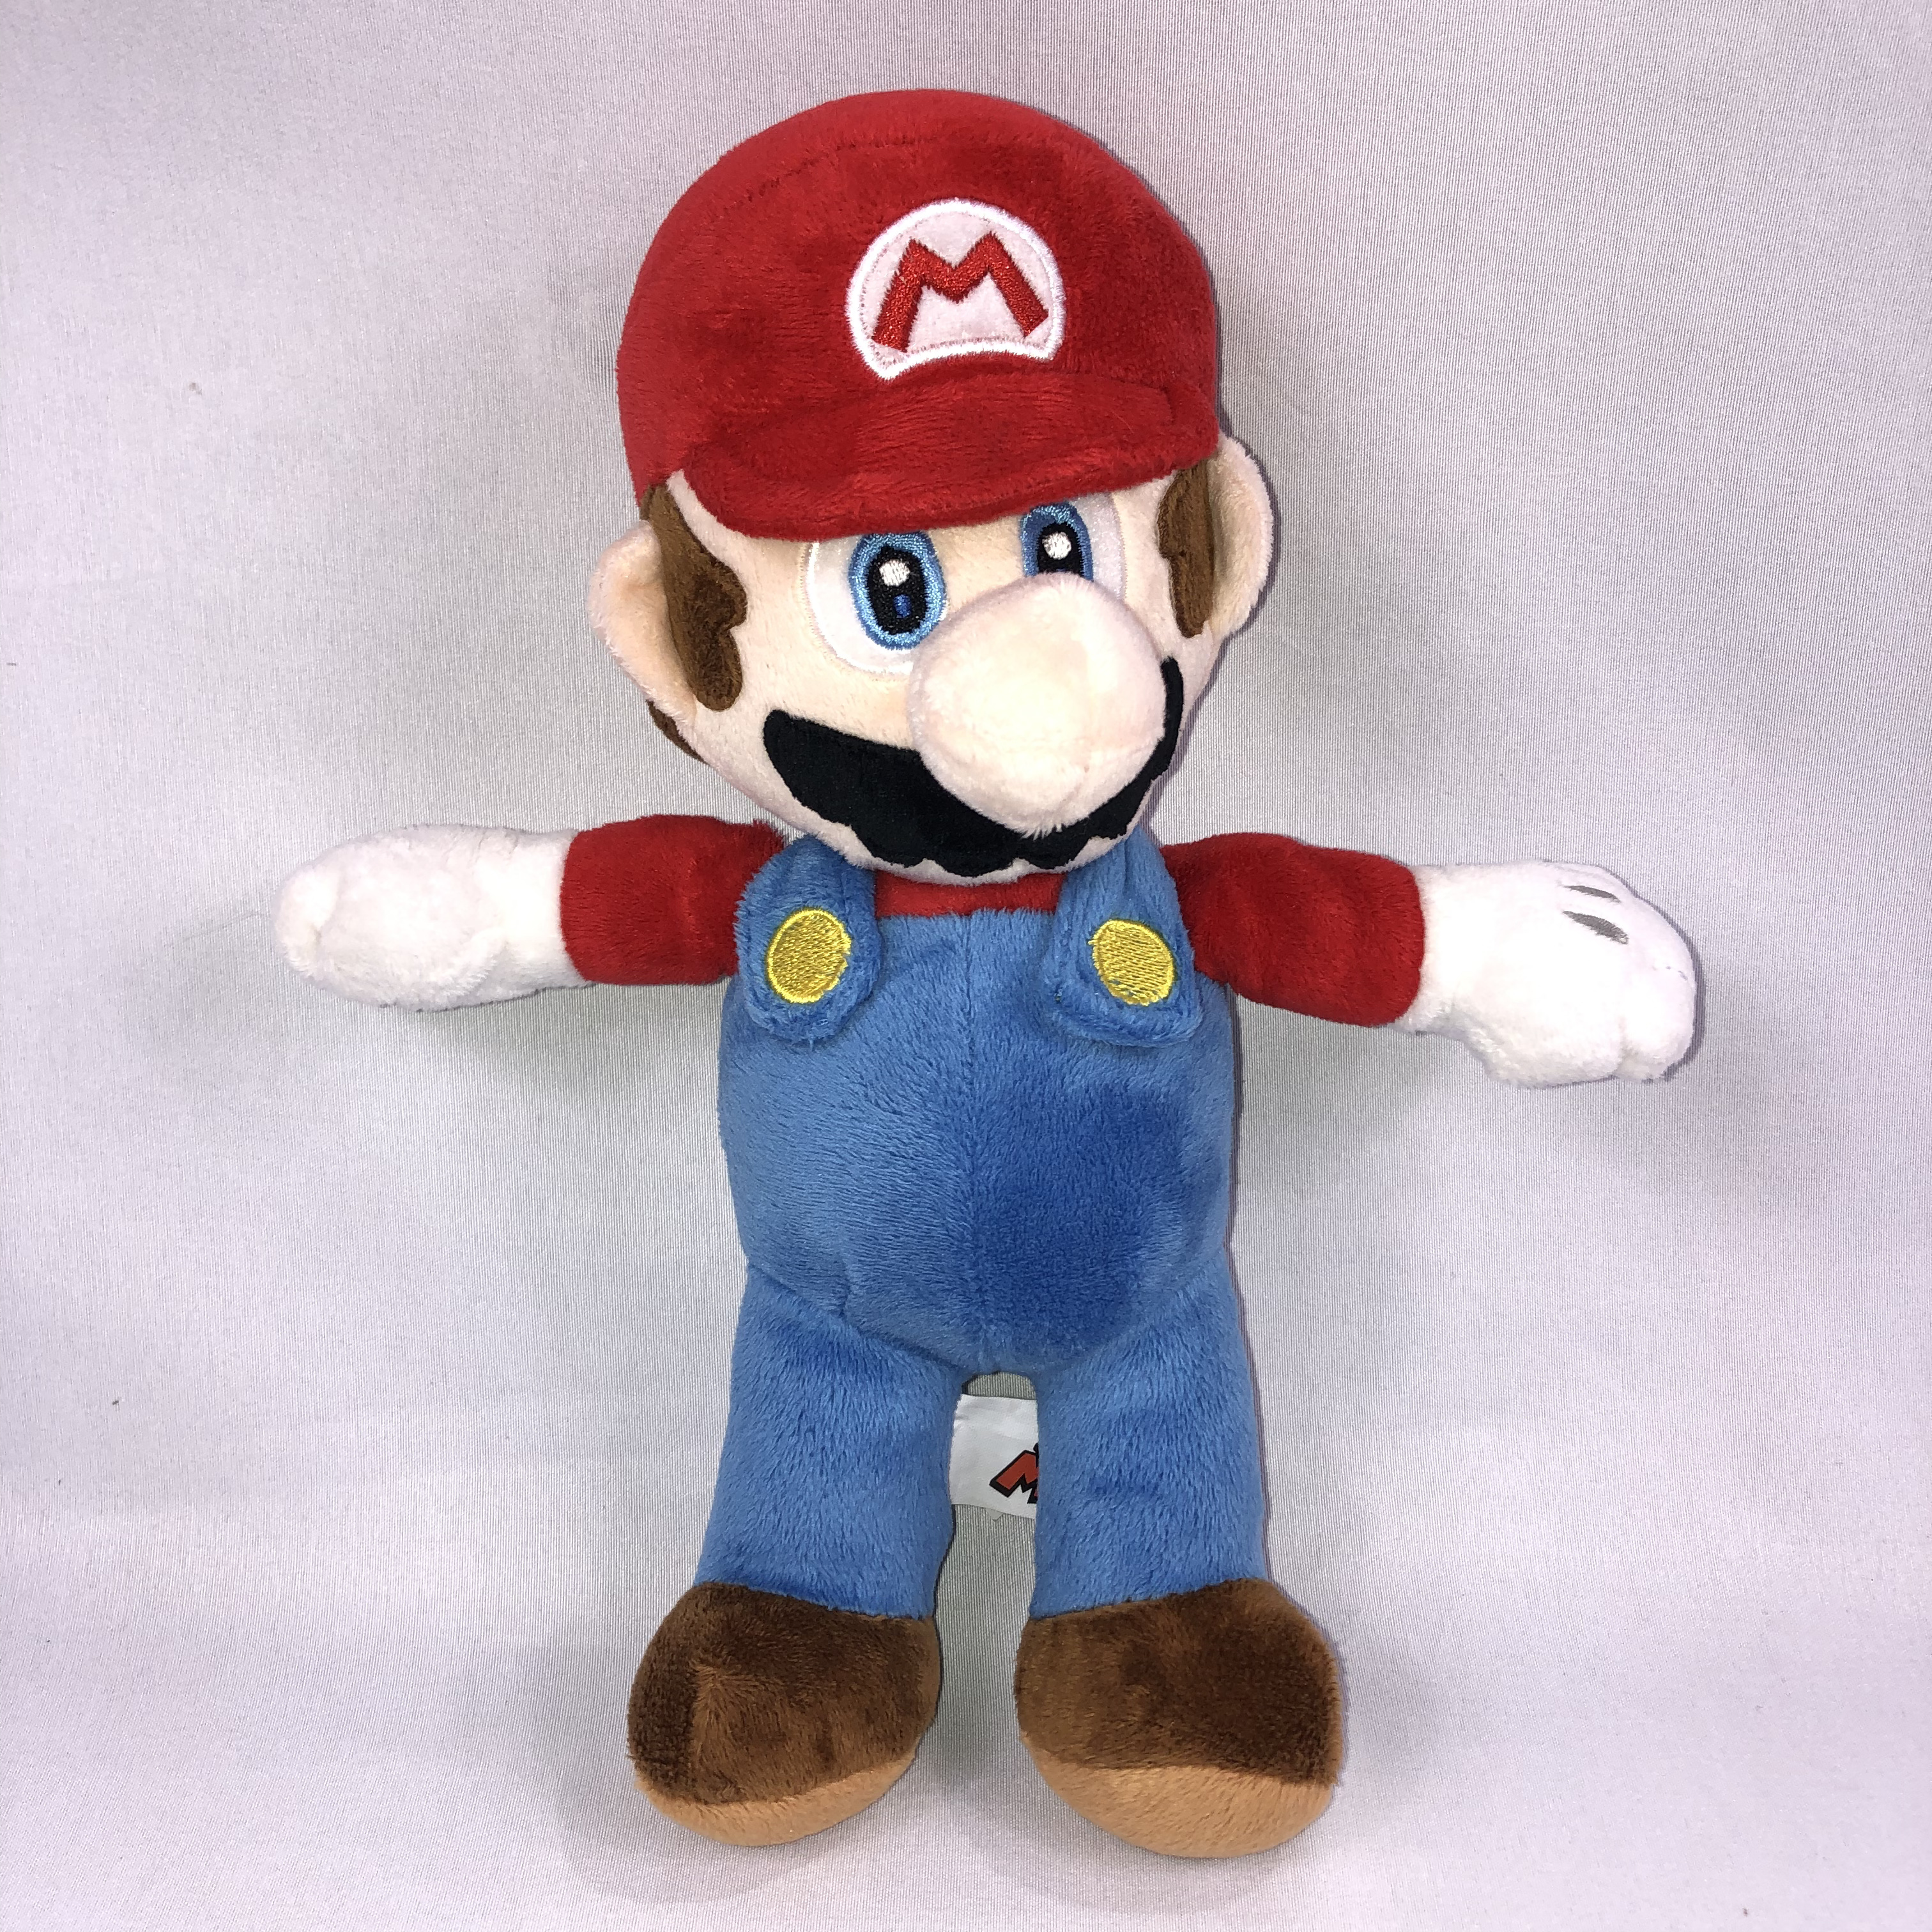 Super Mario 12" Plush Mario by Nintendo C9